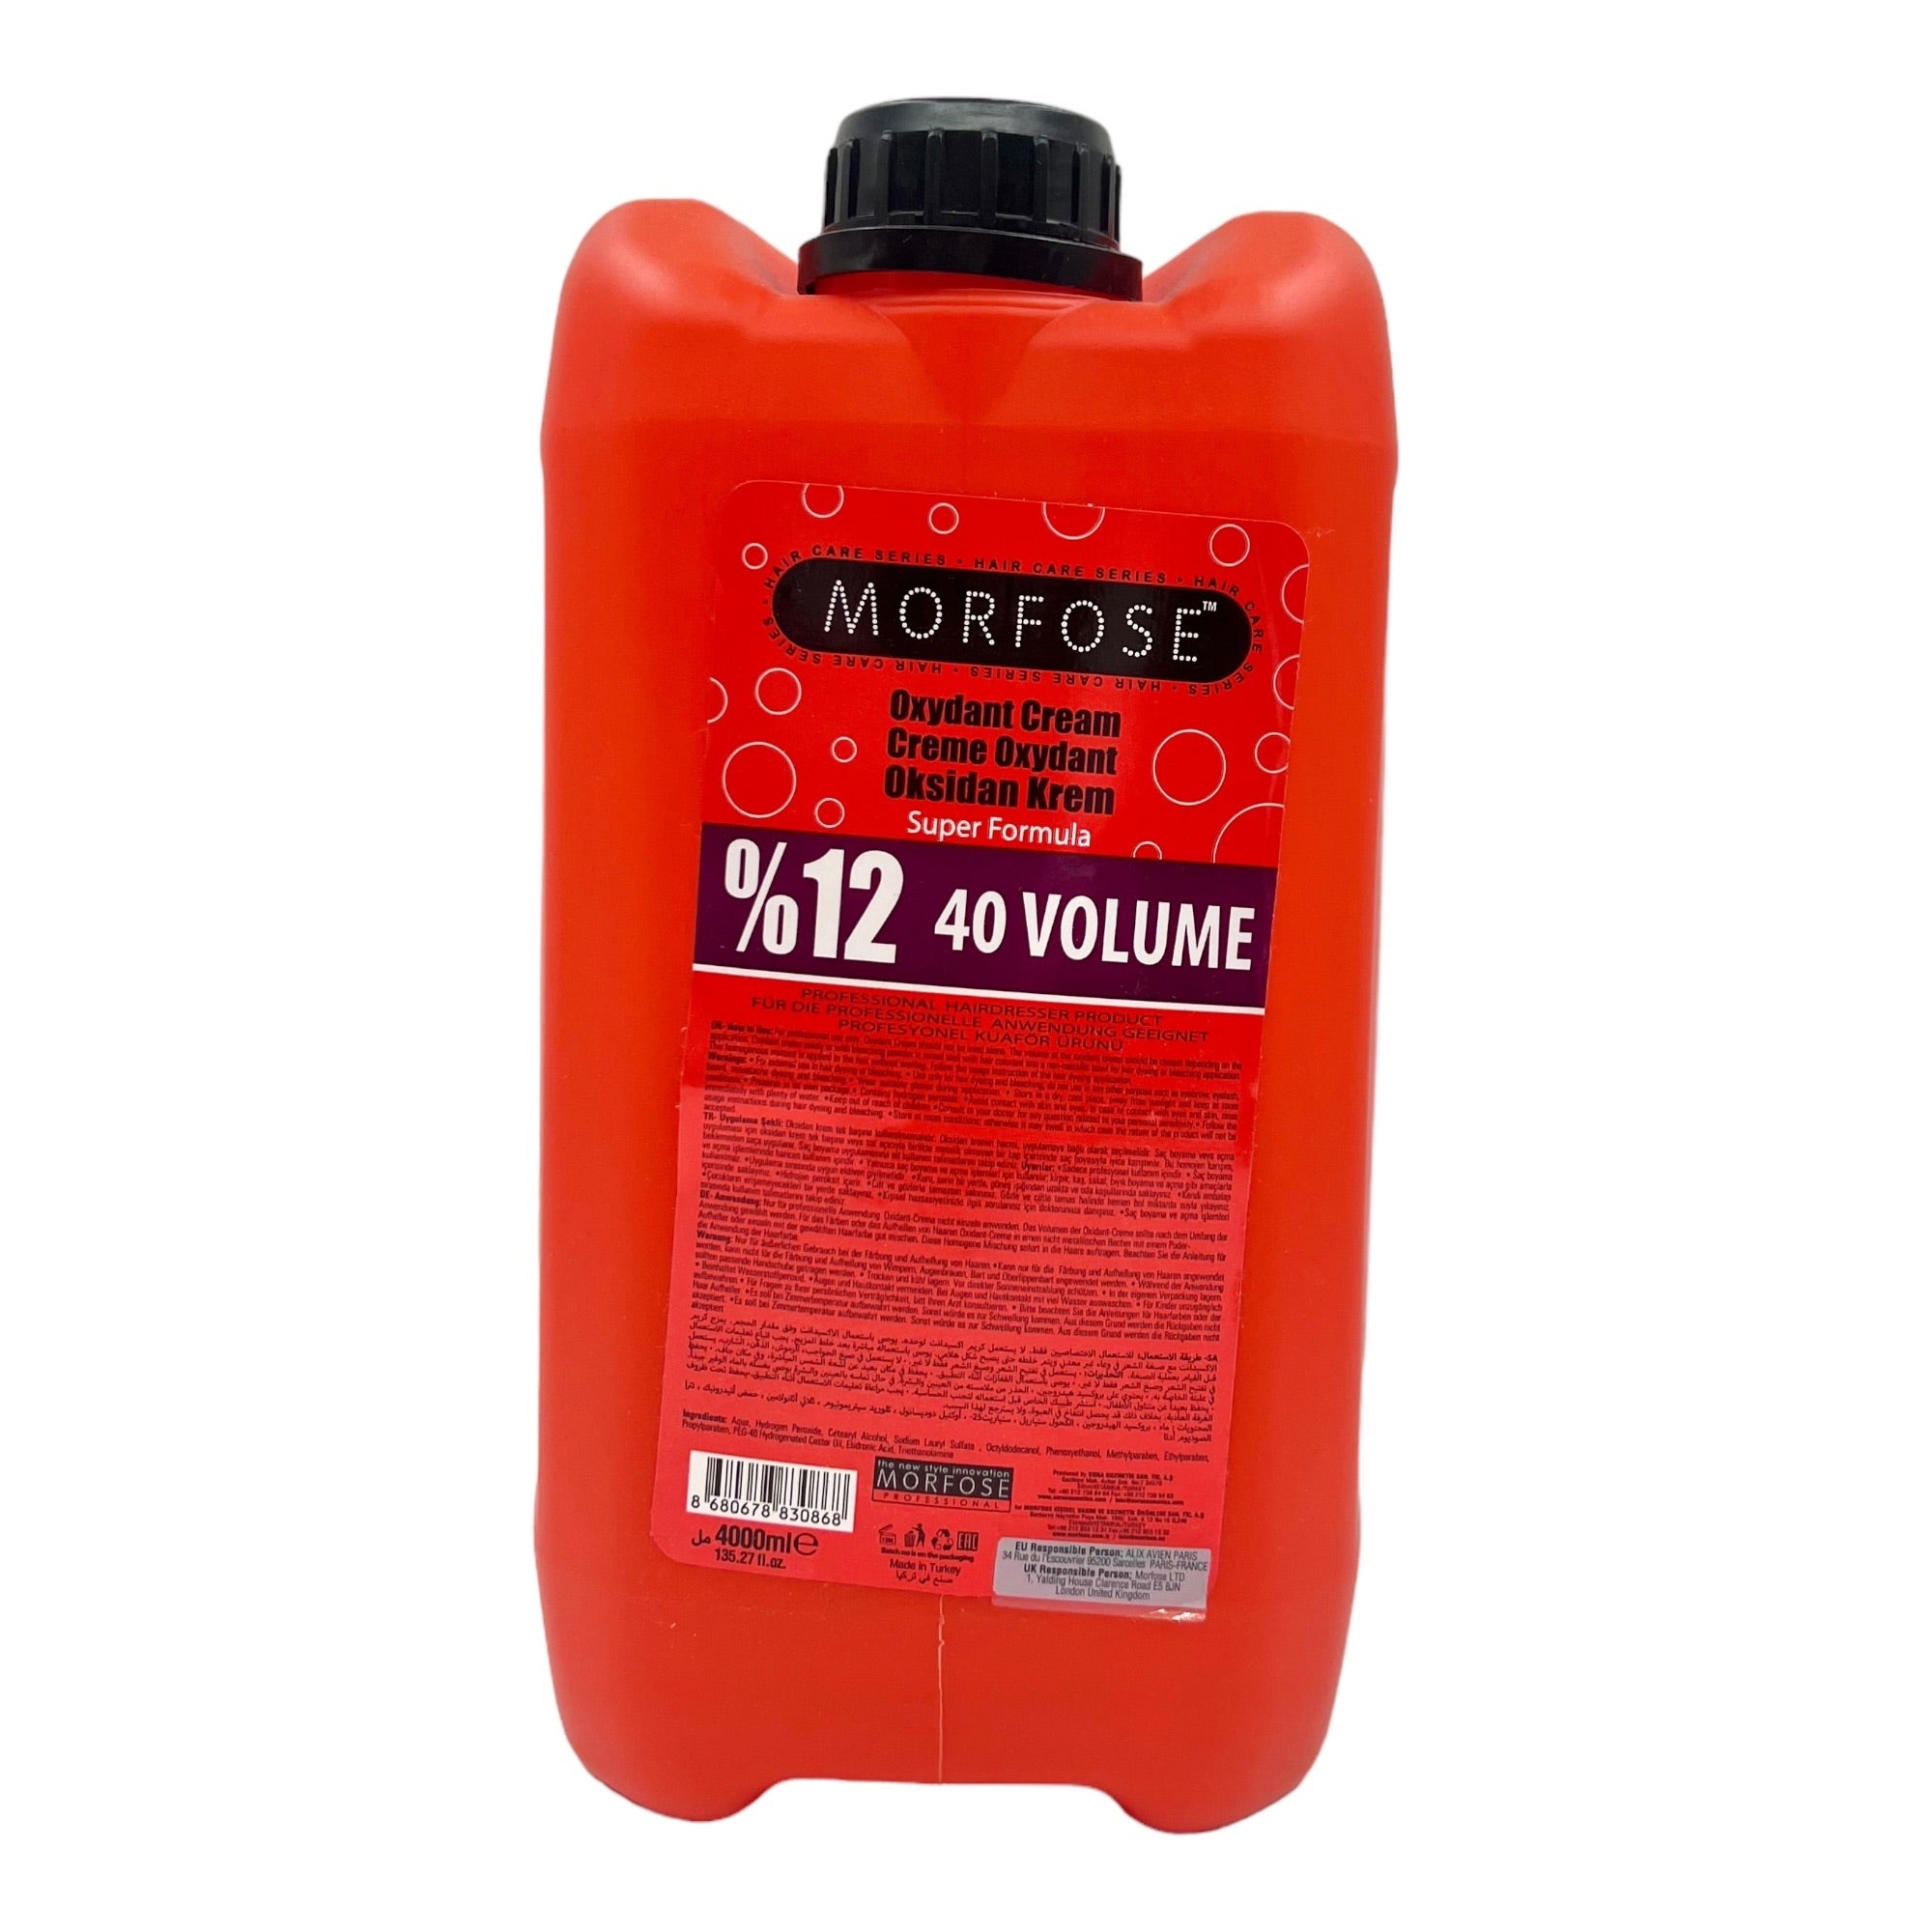 Morfose - Oxidant Cream 40 Volume 4000ml